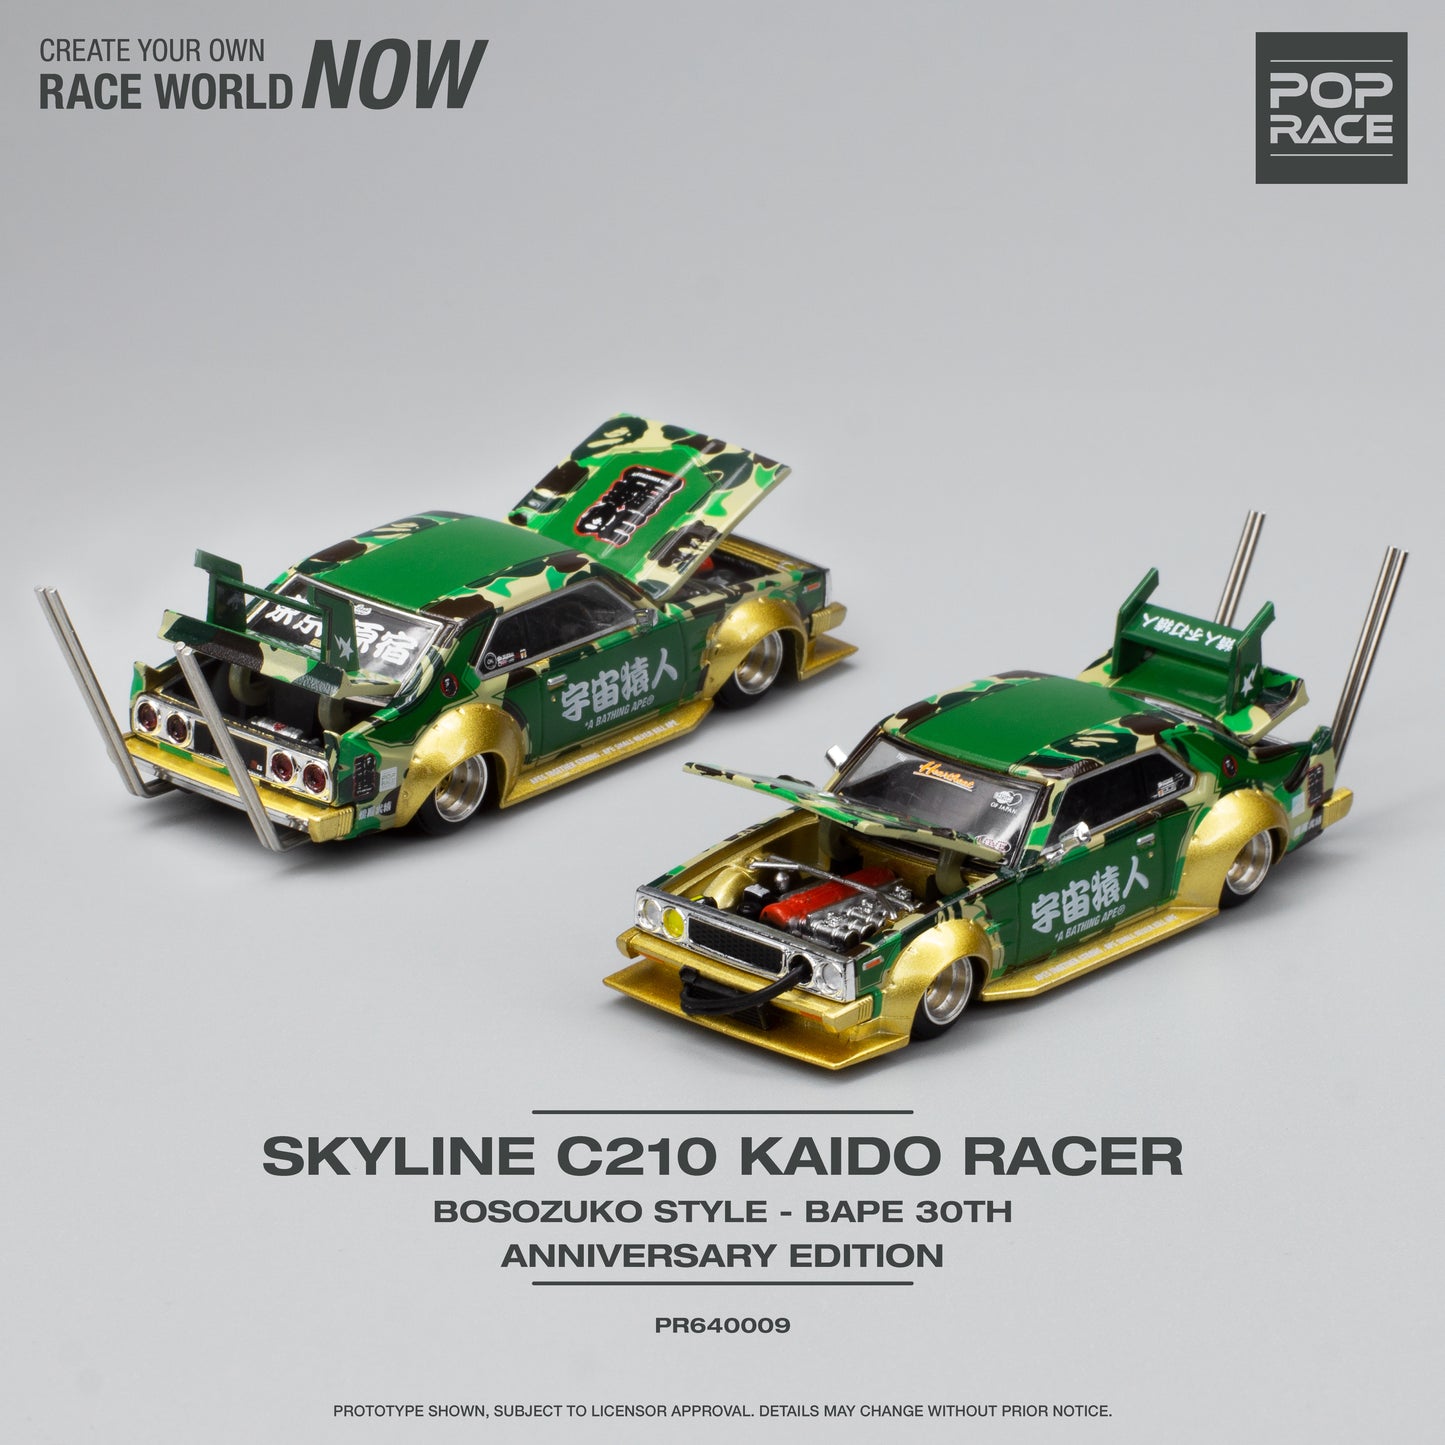 Pop Race 1/64 SKYLINE C210 KAIDO RACER
BOSOZUKO STYLE - BAPE 30TH ANNIVERSARY EDITION